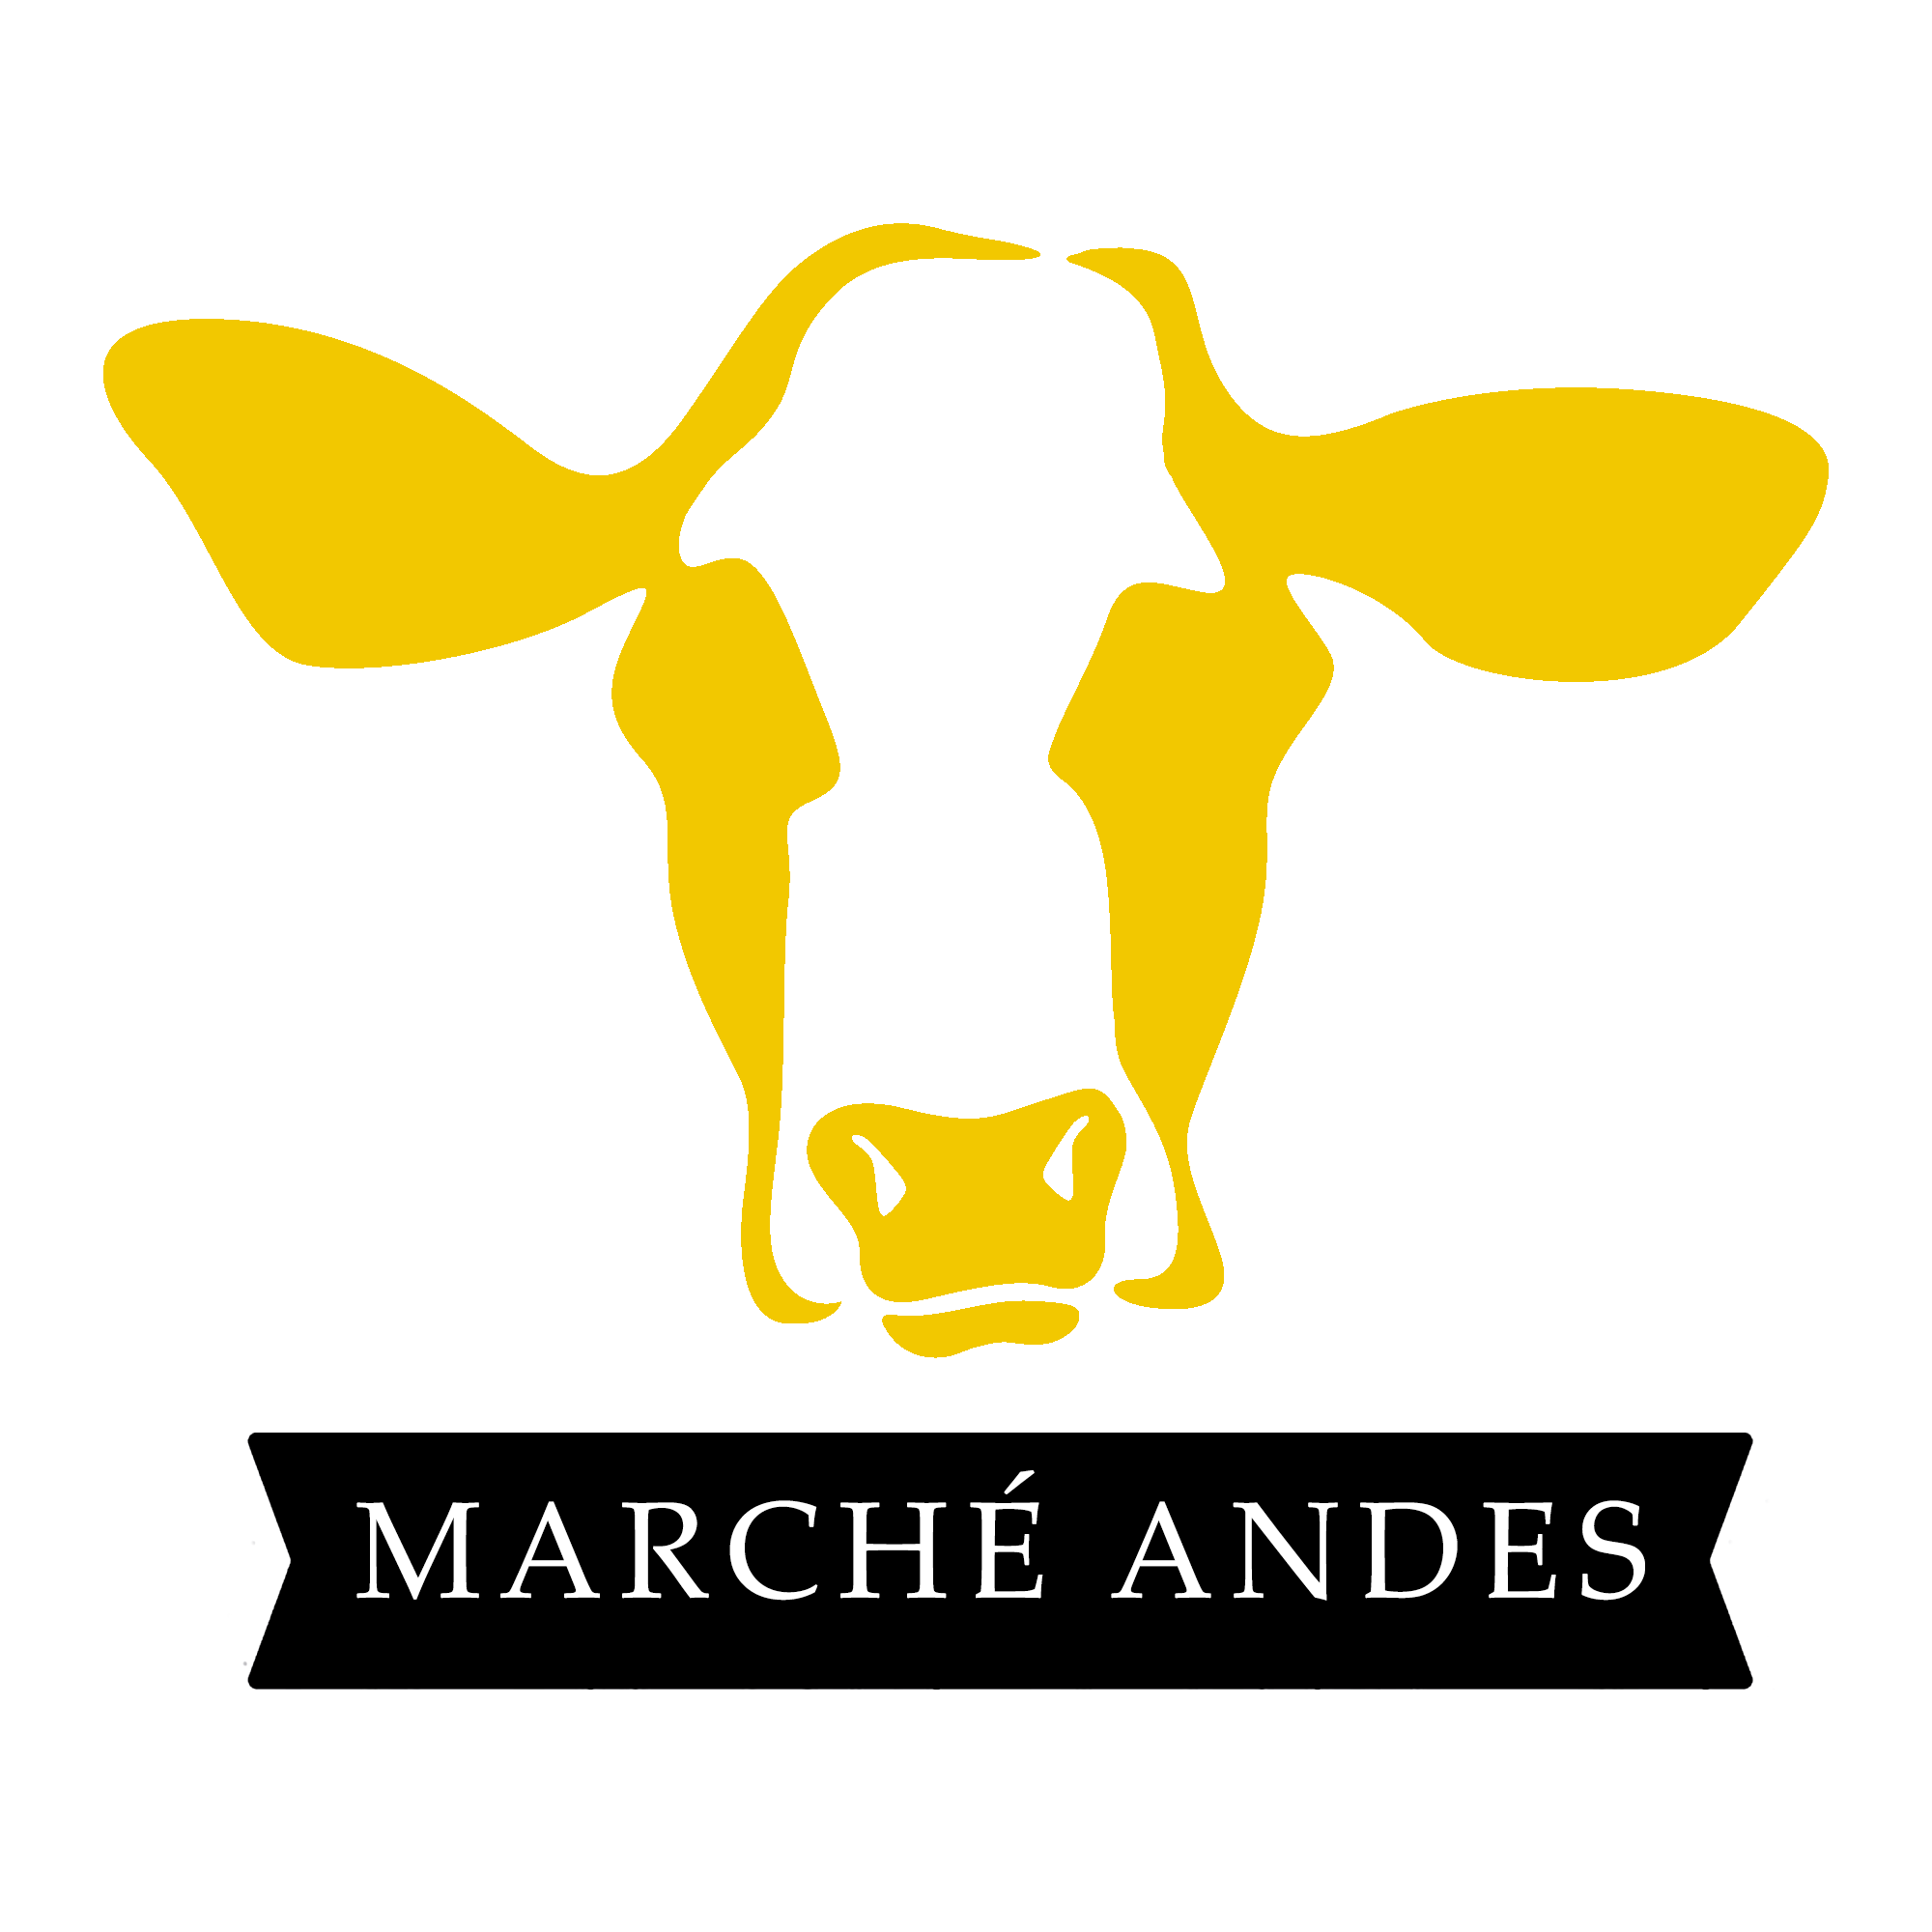 Carniceria Marche Andes